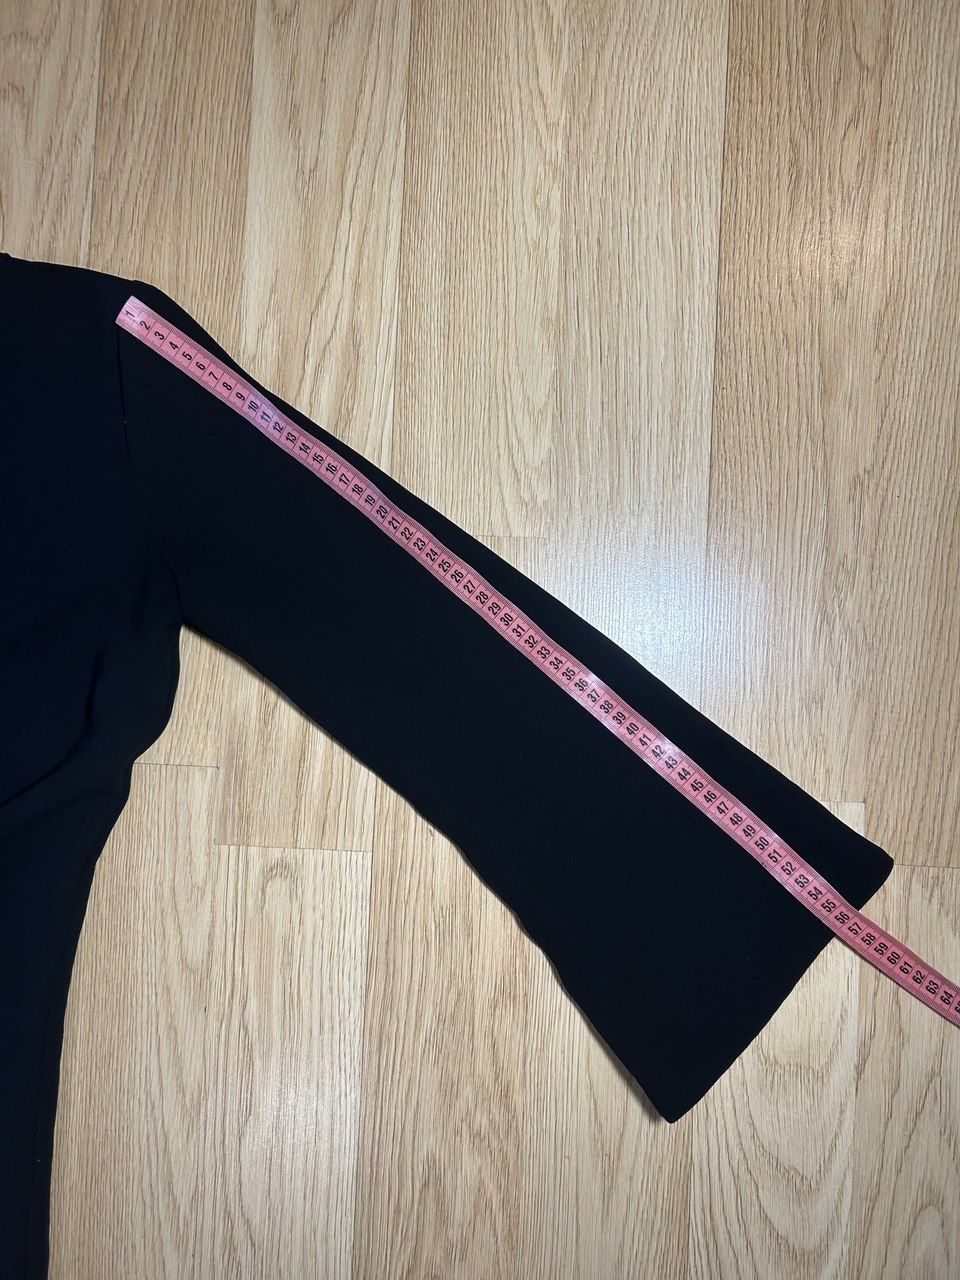 Сукня Zara розмір M